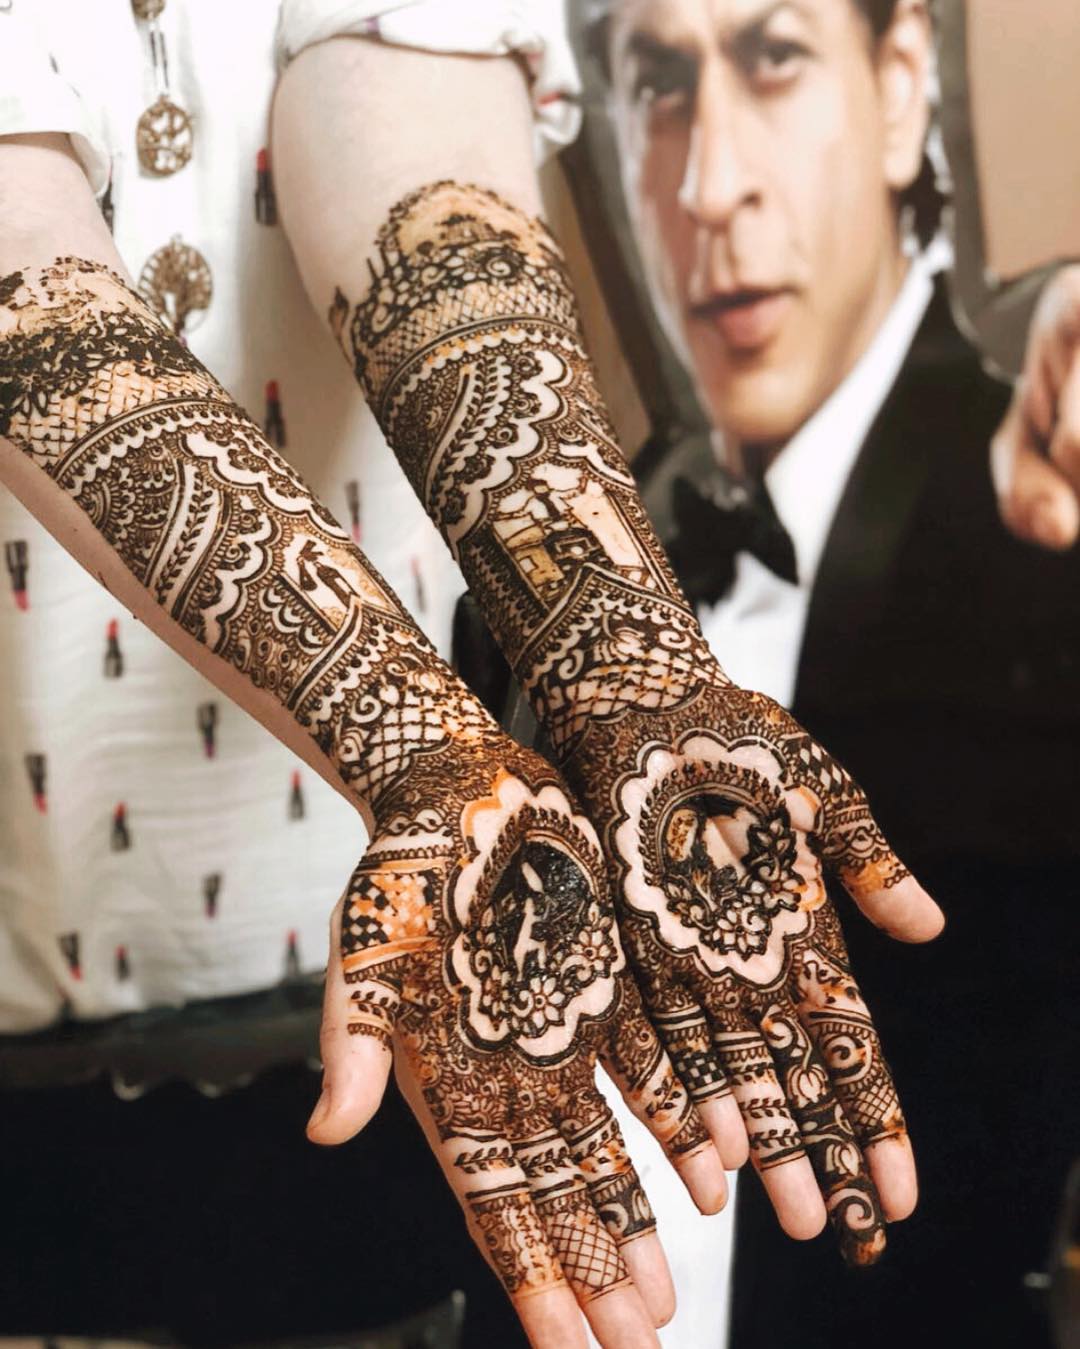 This henna/mehndi design : r/mildlyinfuriating